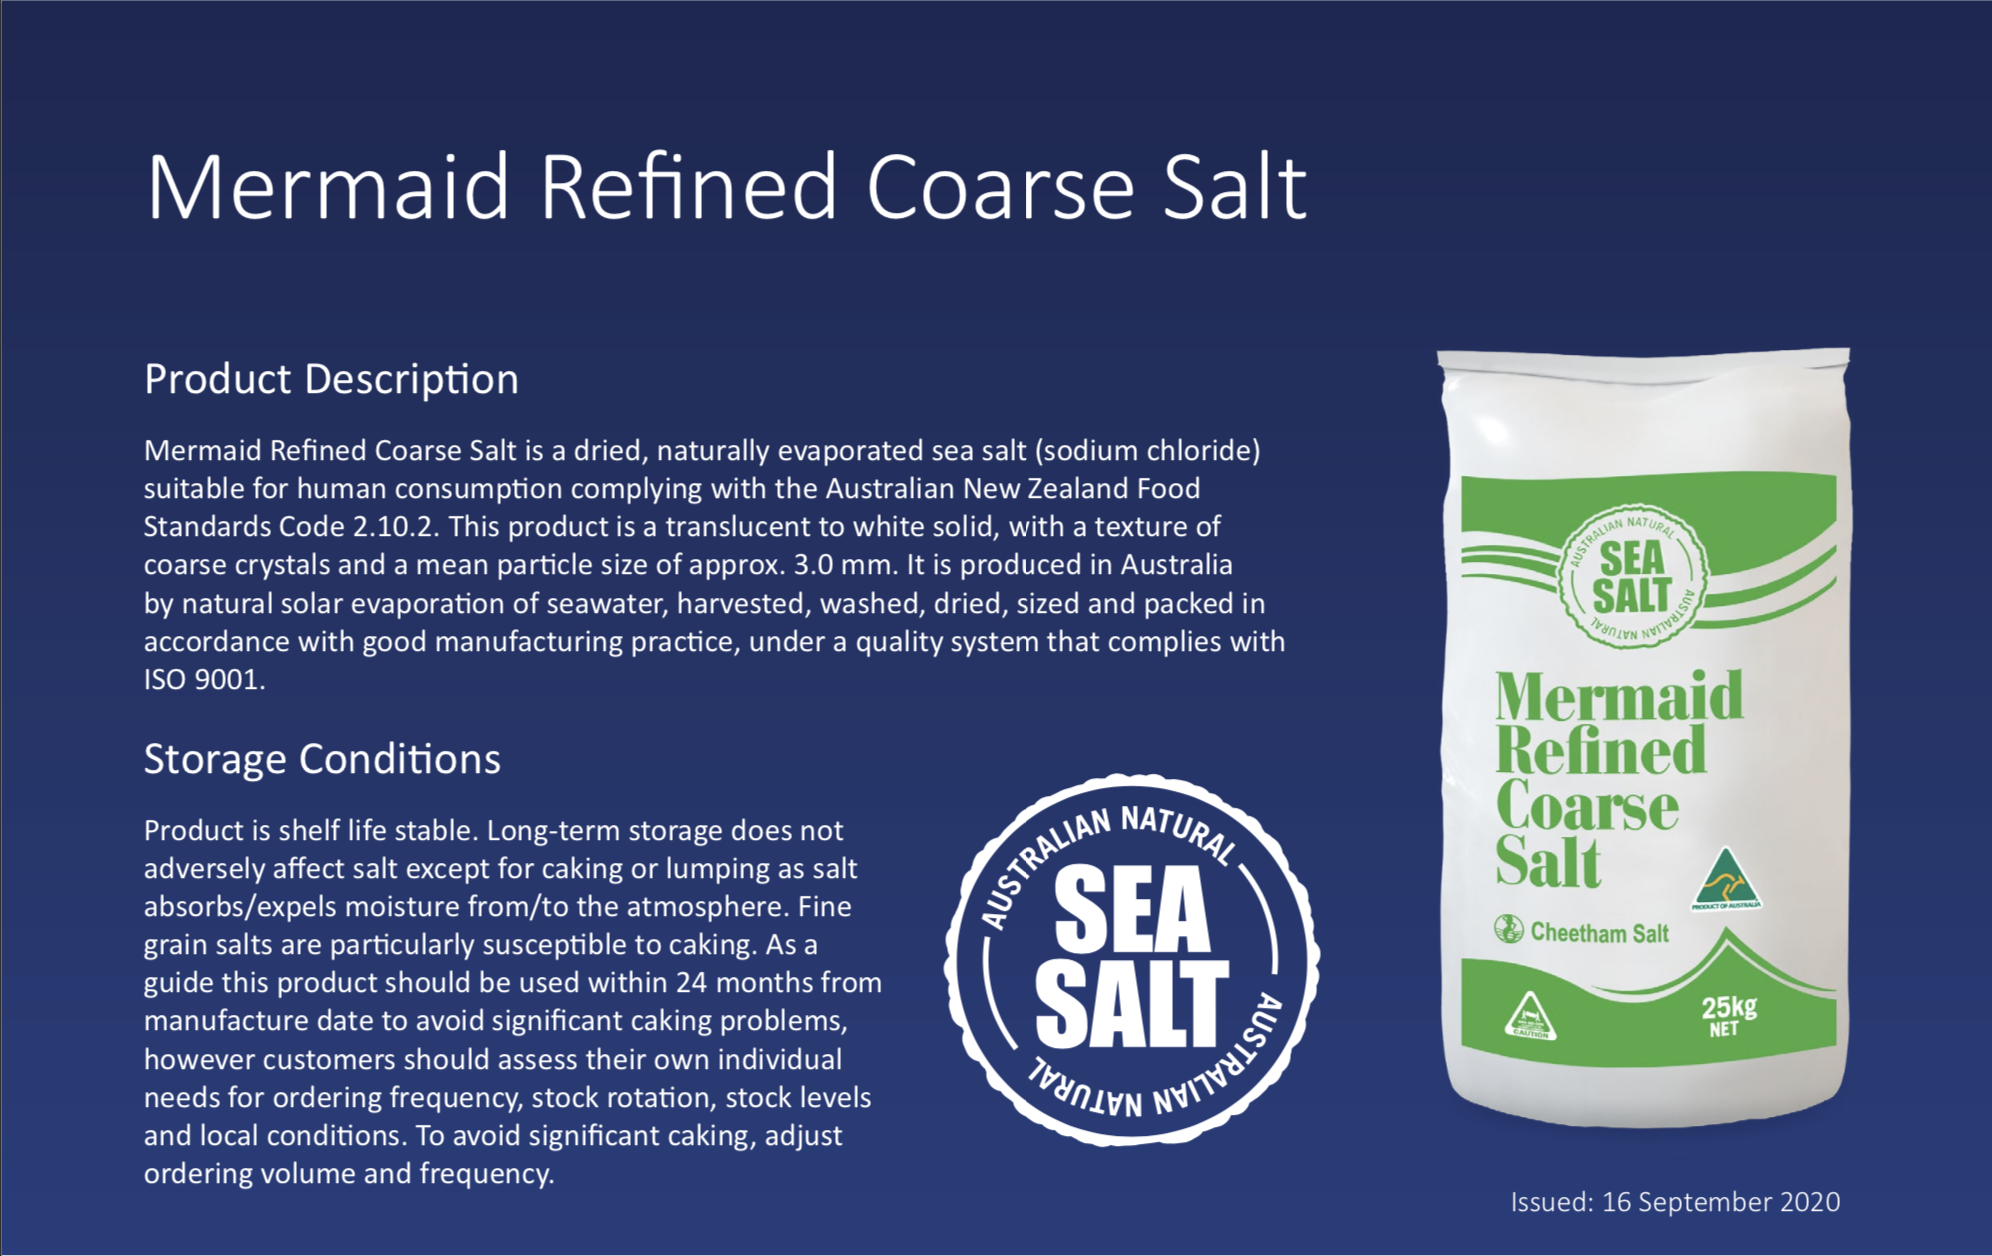 Mermaid Refined Coarse Salt product description. The product description includes a seal stating 